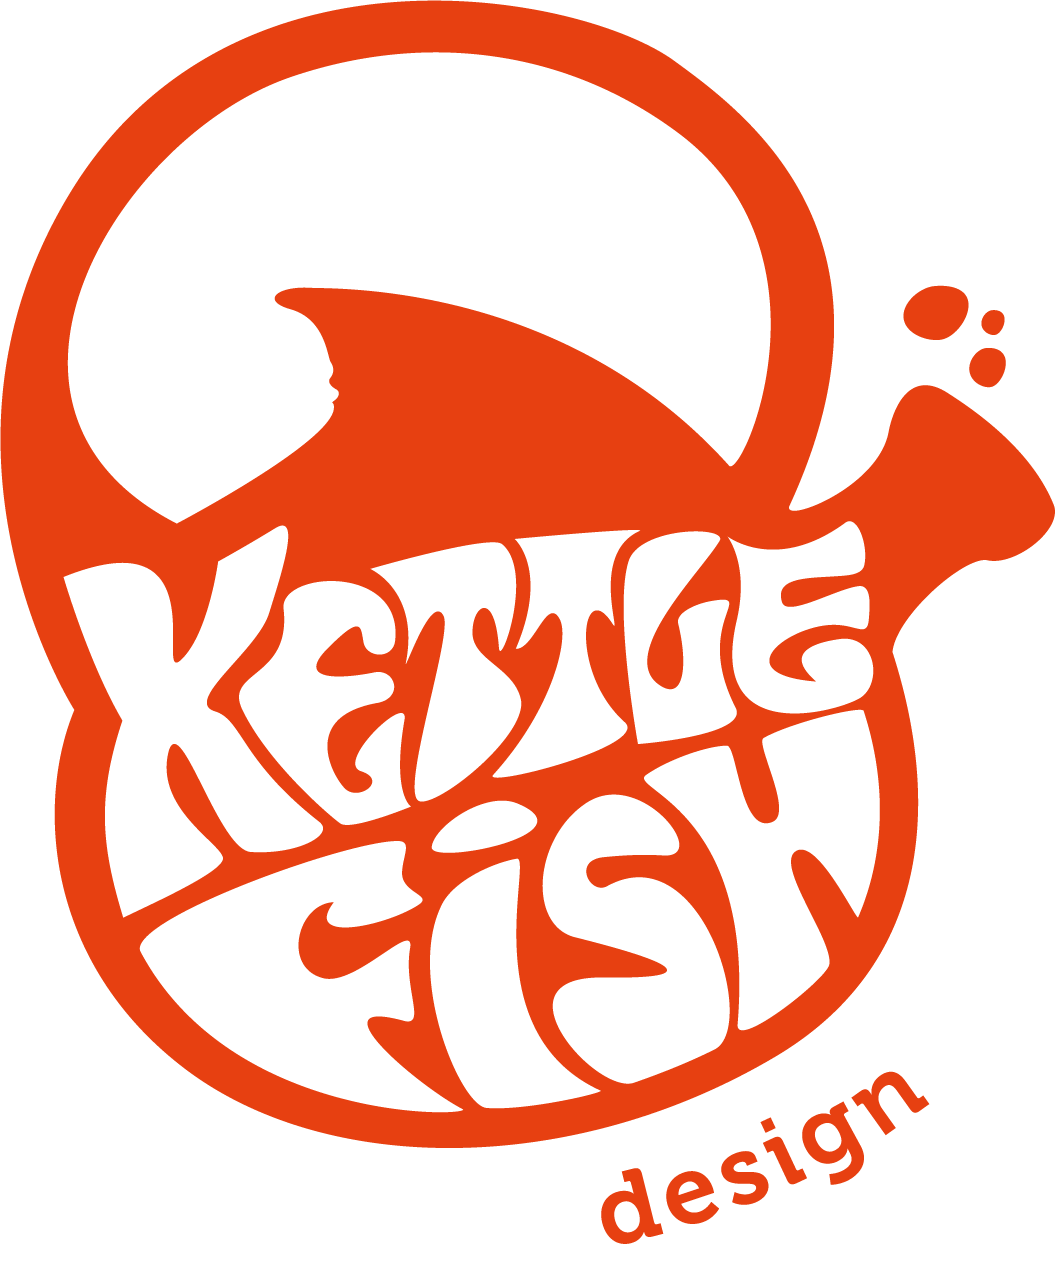 Kettlefish Design